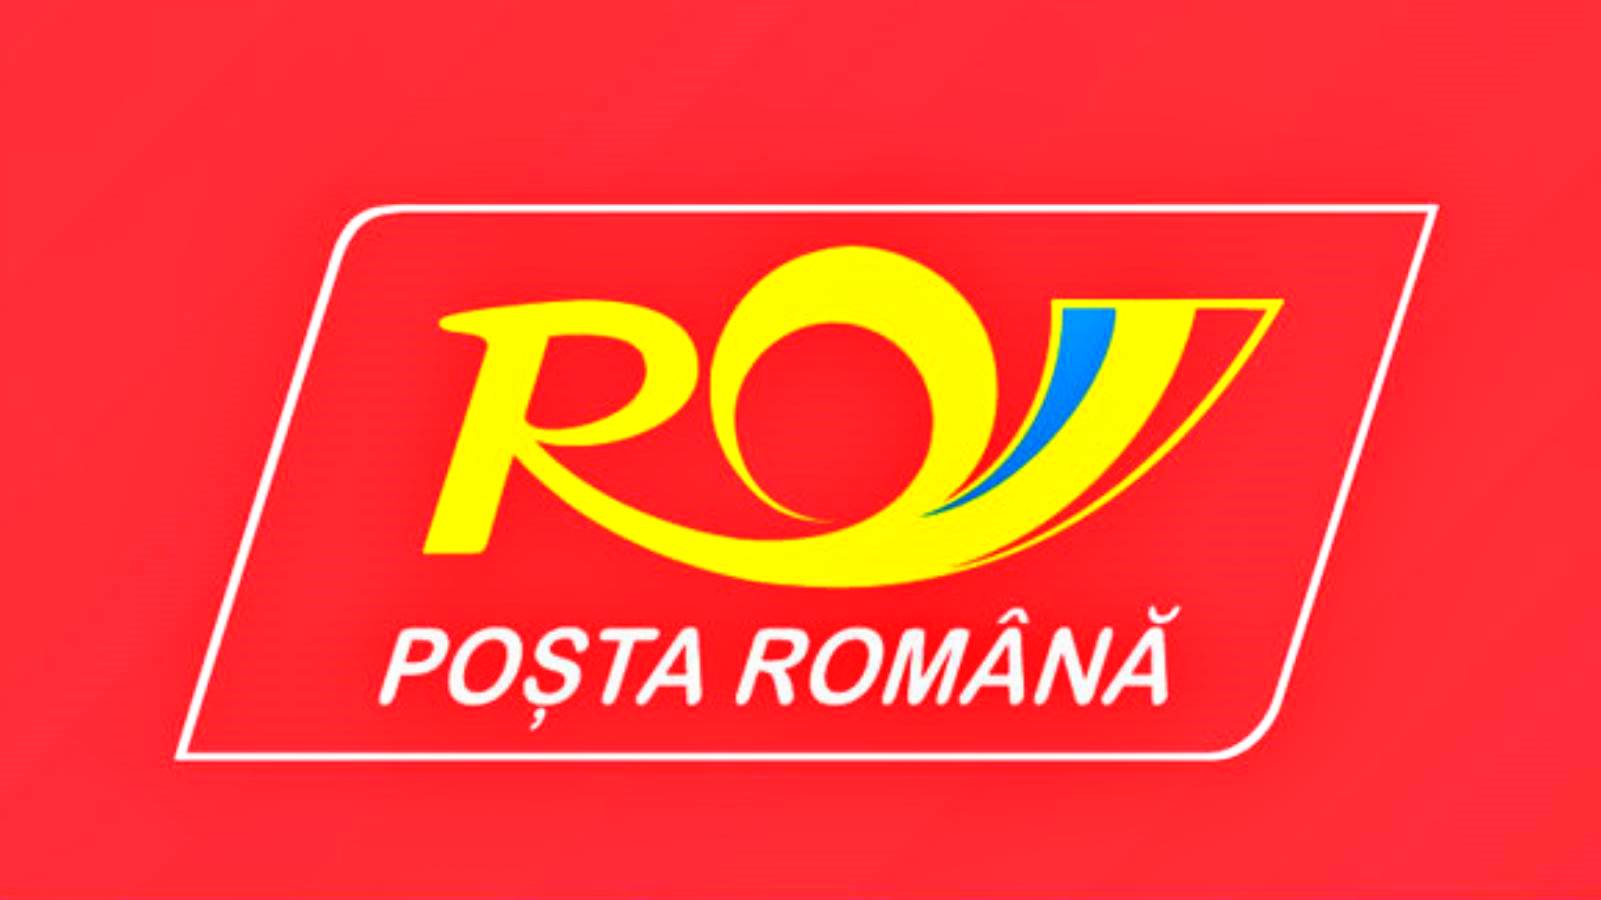 Impozitele pe care Posta Romana le Colecteaza in Oficiile din Romania